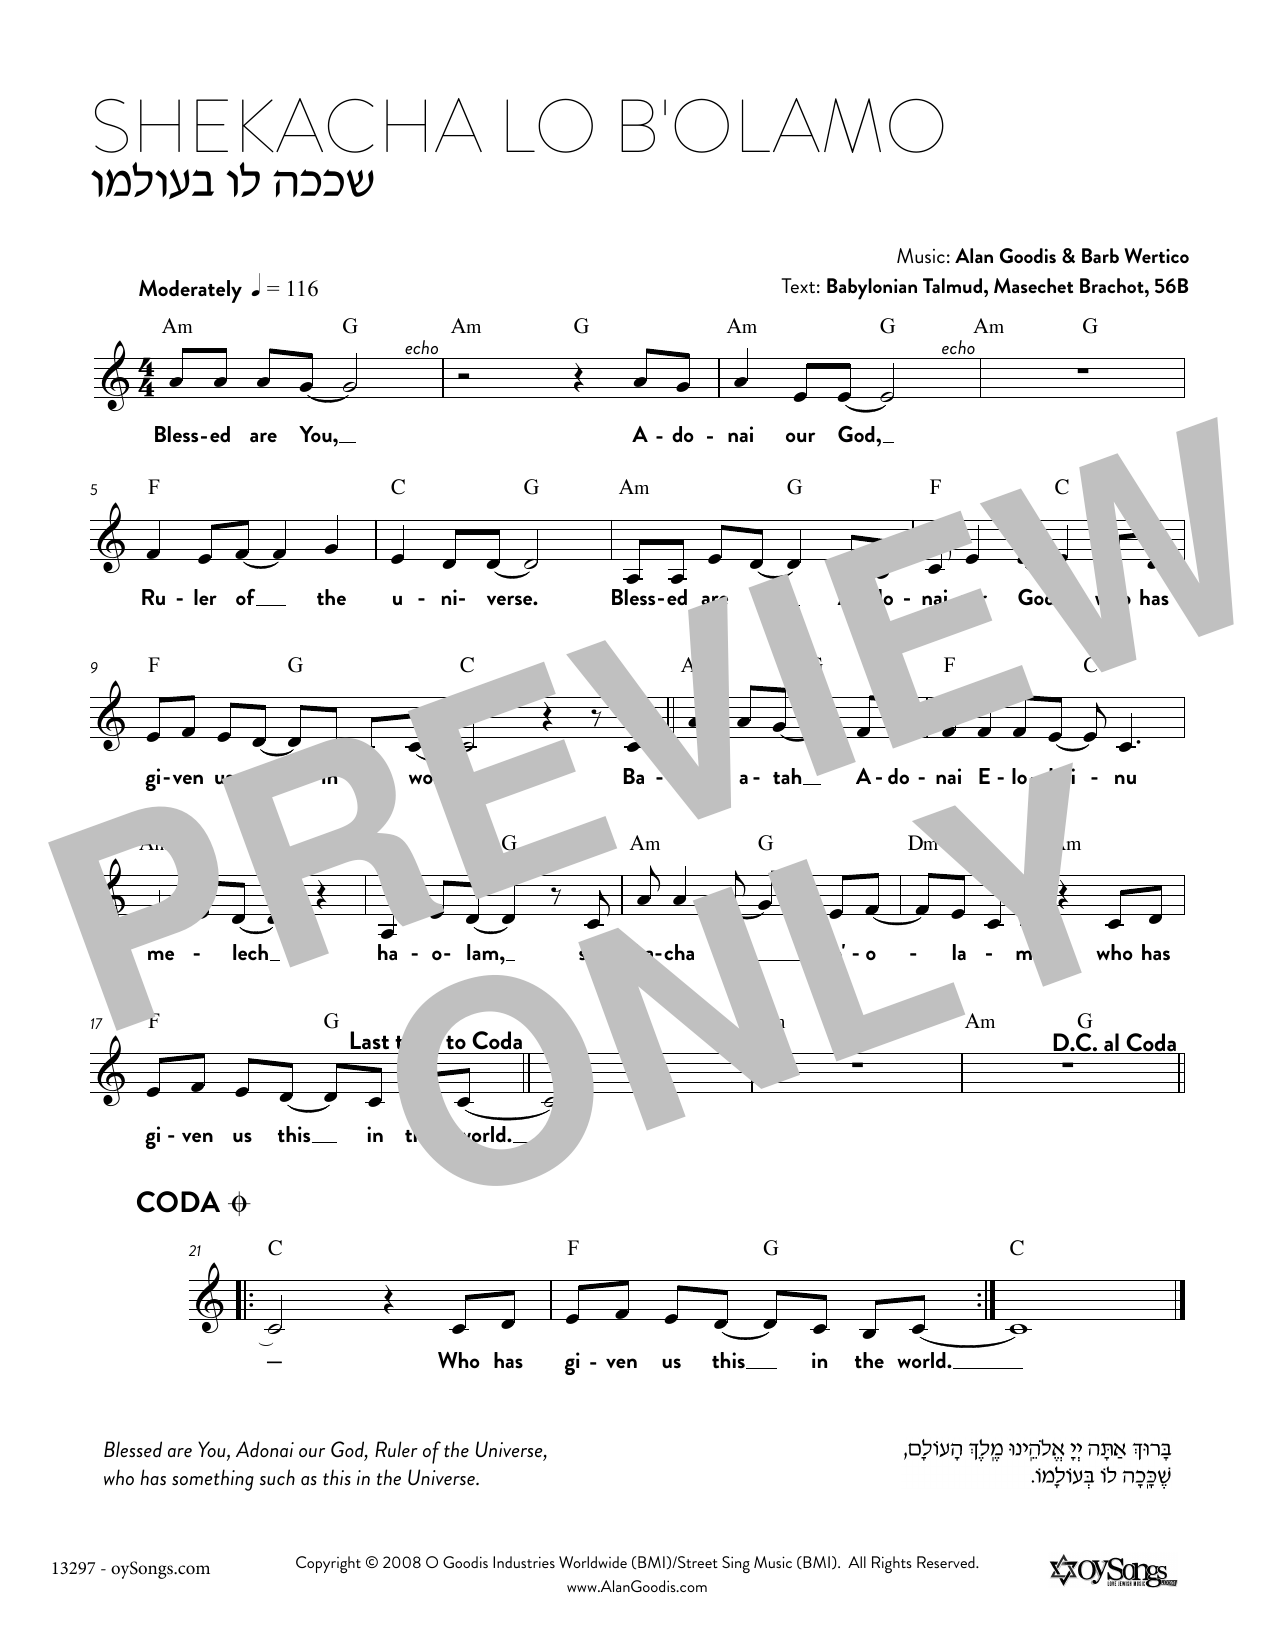 Alan Goodis Shekacha Lo B'olamo Sheet Music Notes & Chords for Real Book – Melody, Lyrics & Chords - Download or Print PDF